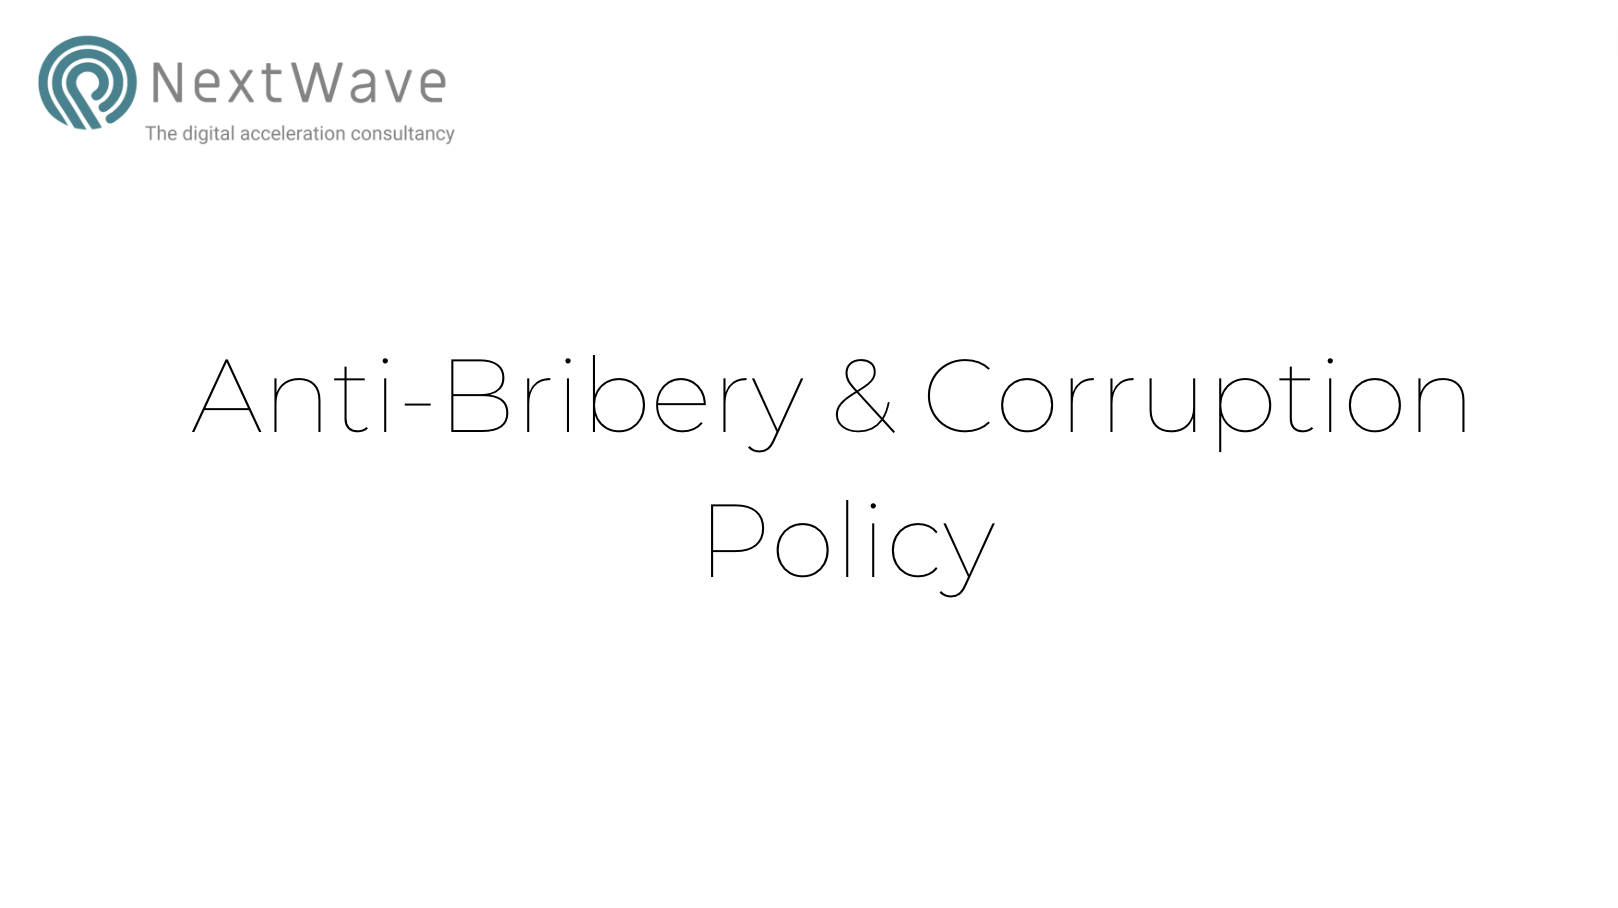 NextWave Policies – Anti-Bribery & Corruption Policy